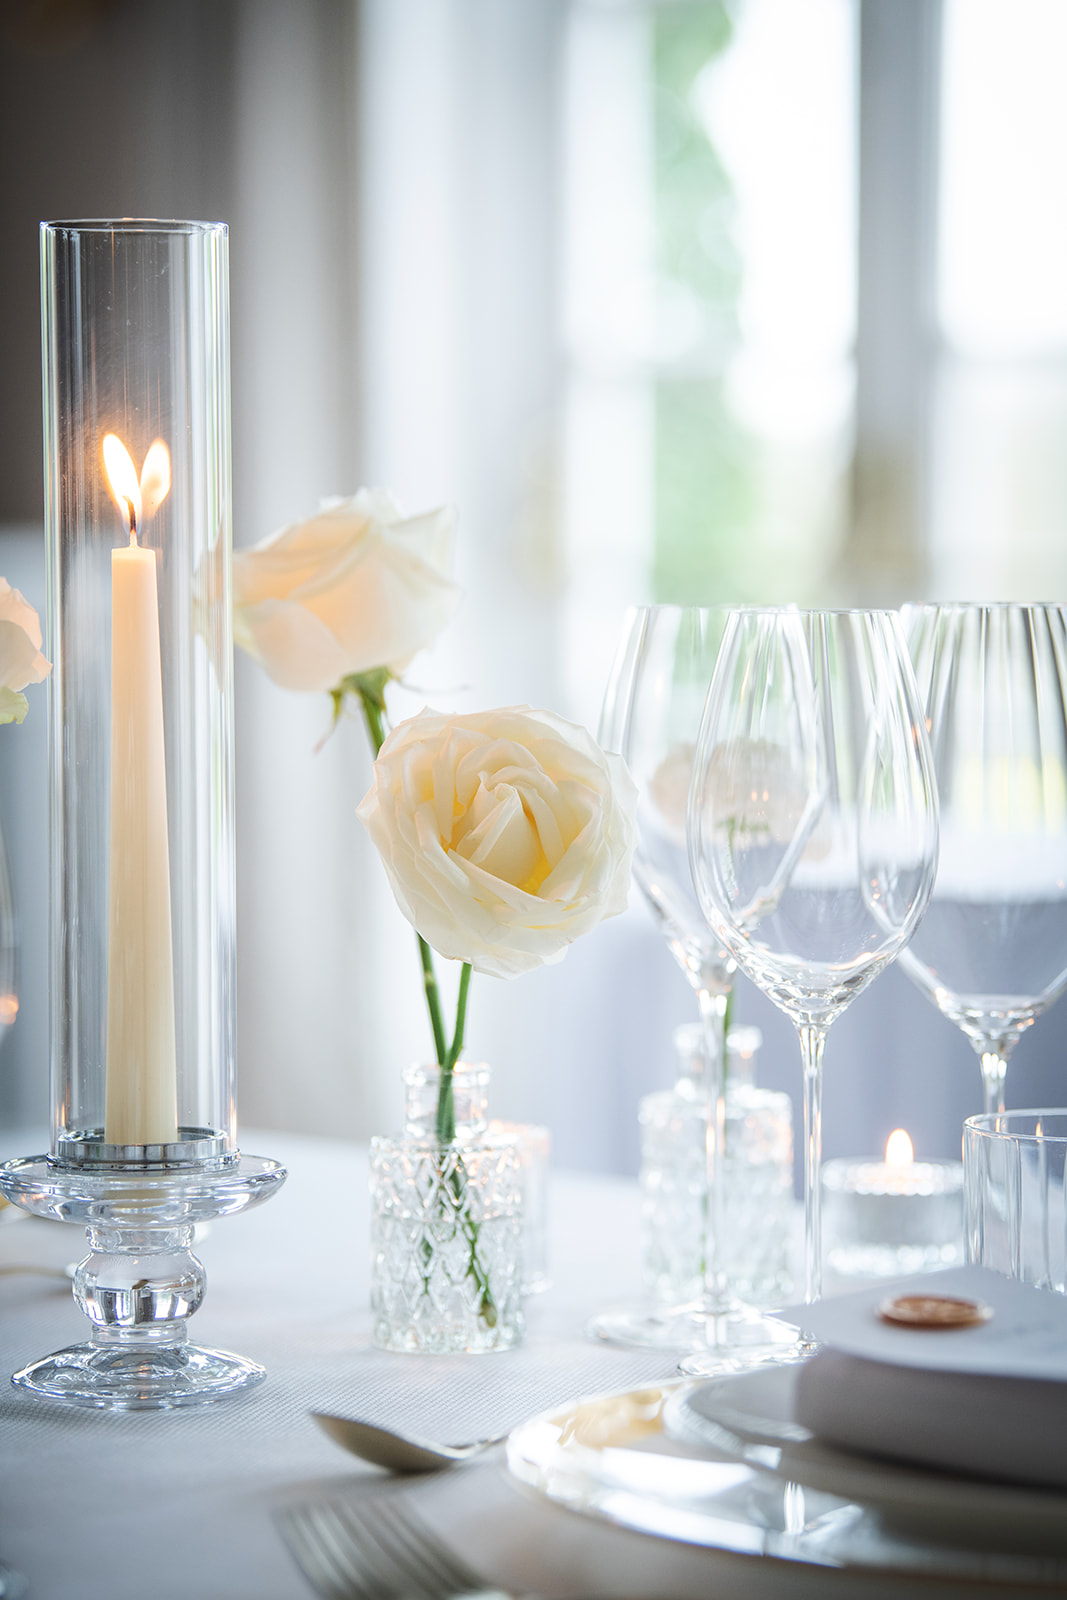 candlelit wedding table-scape